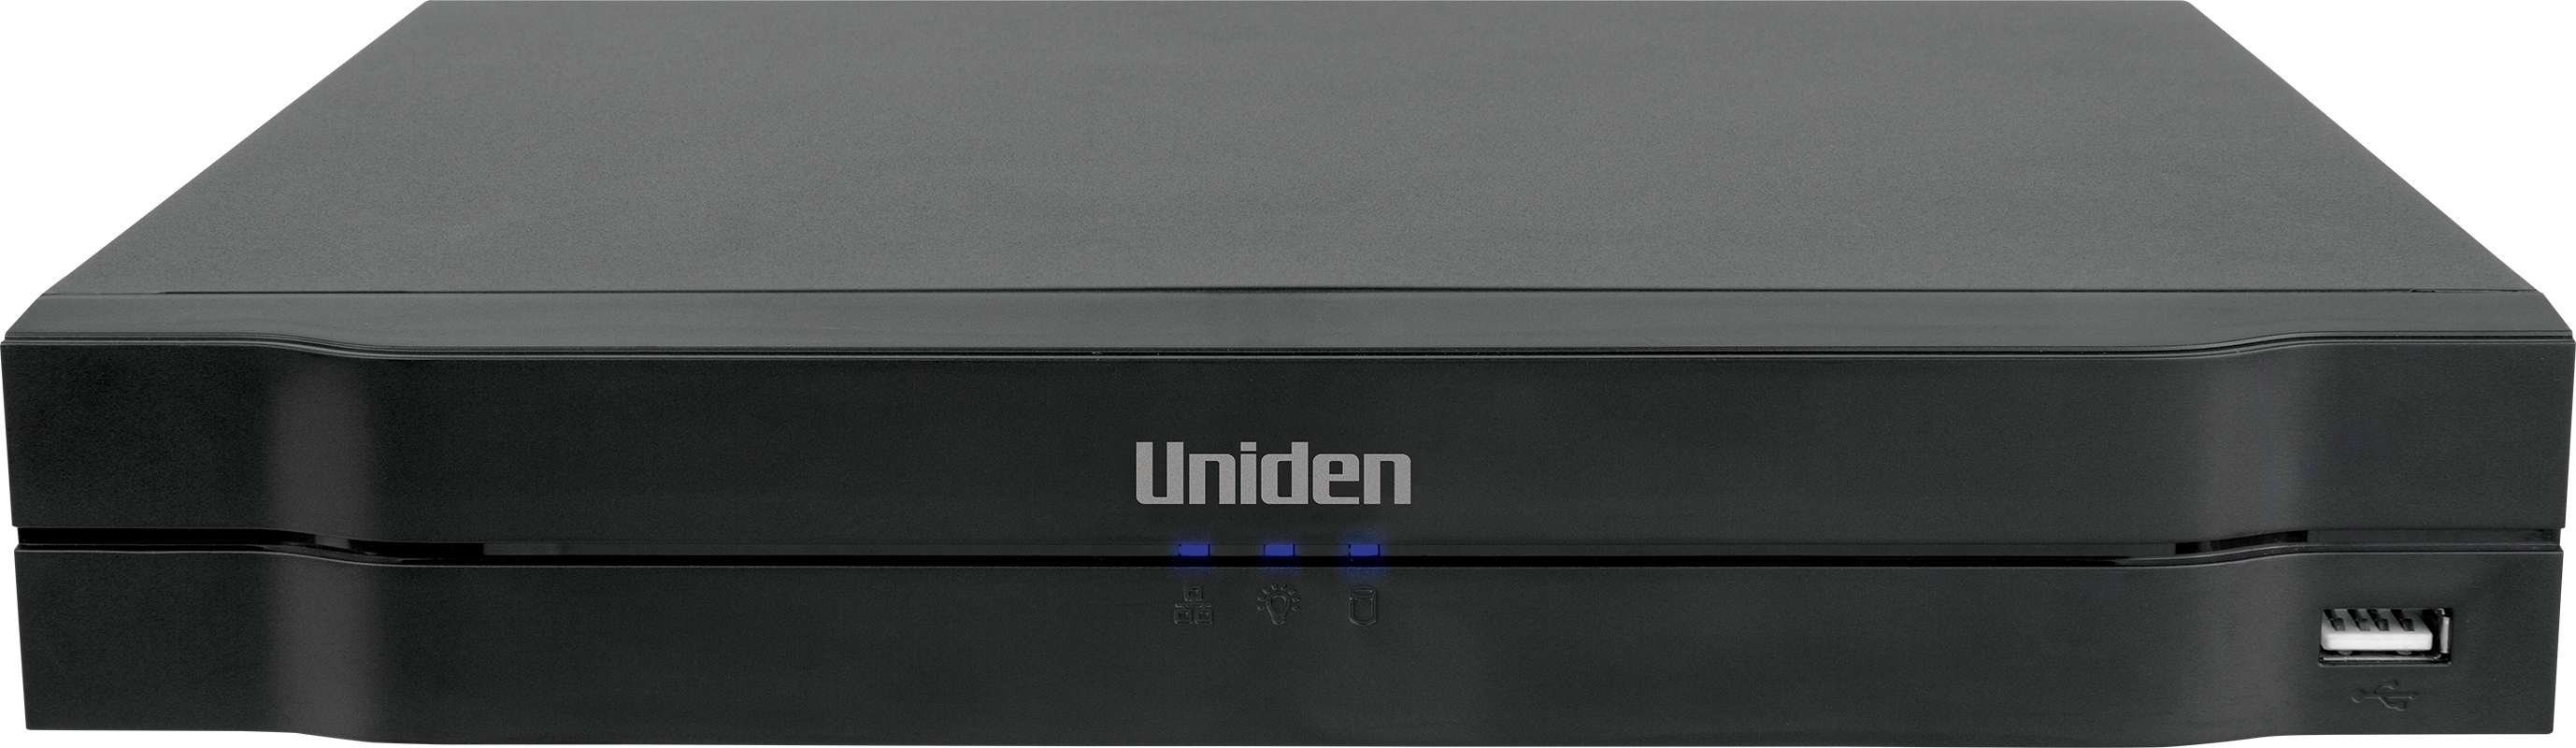 GCVR16H80 - Uniden